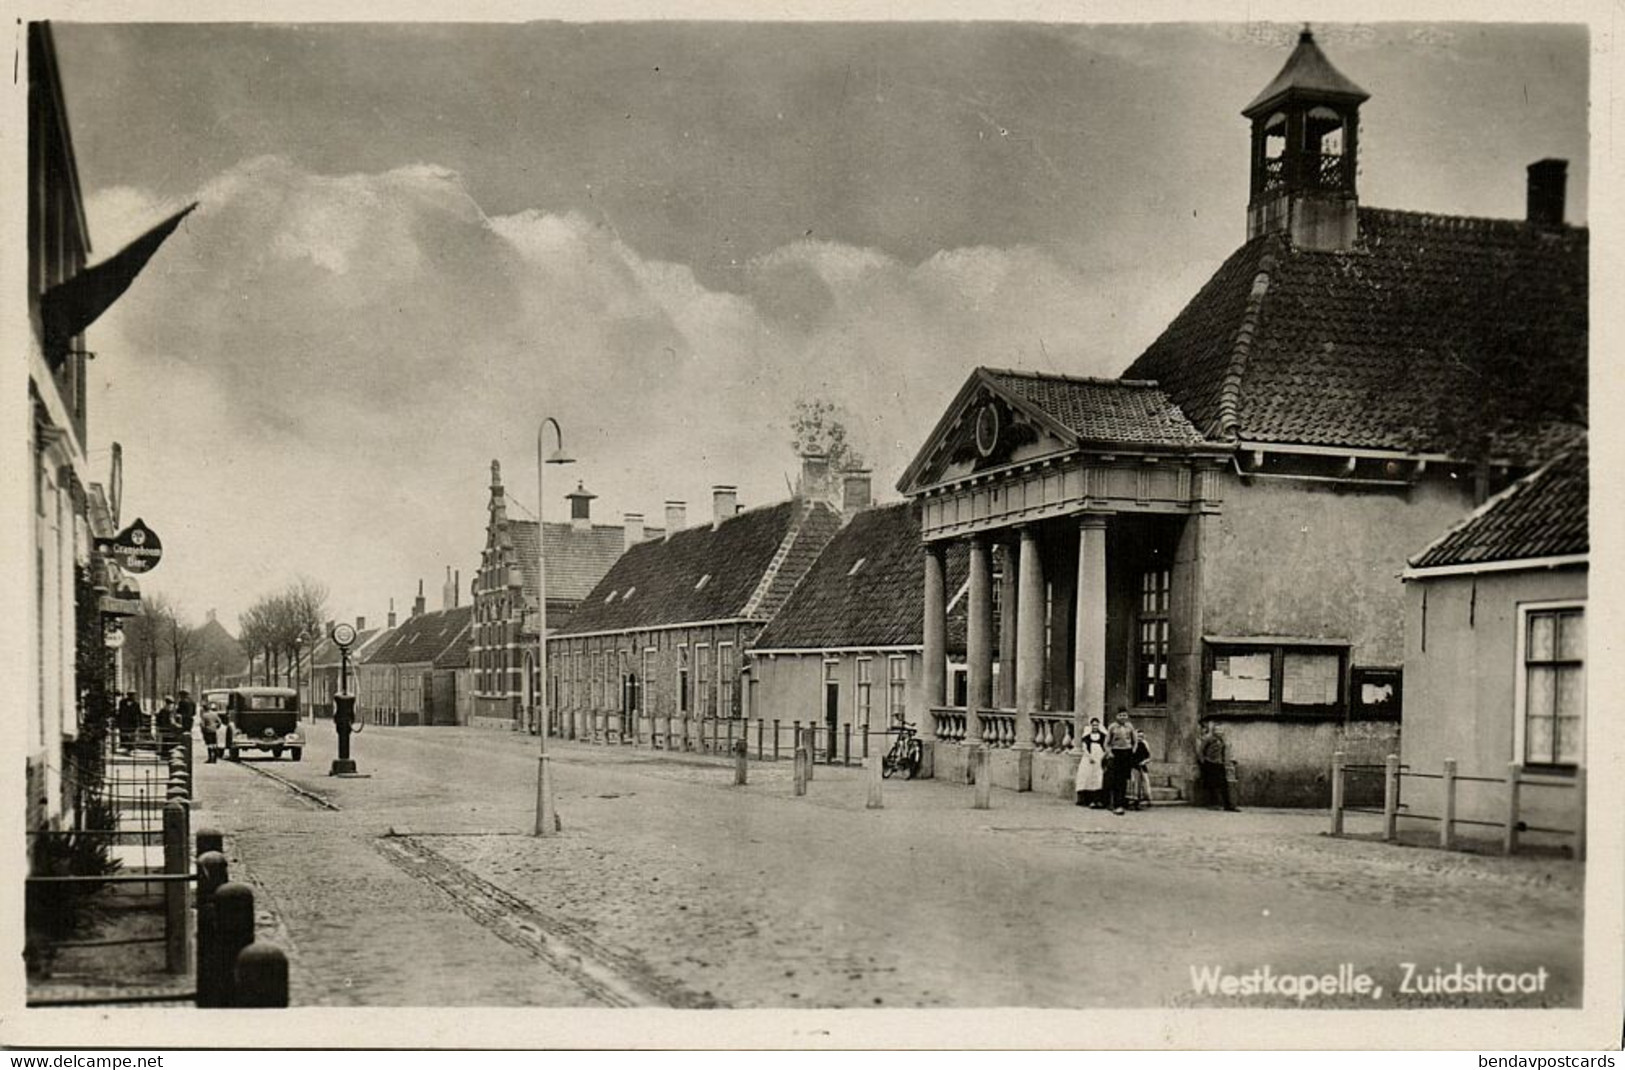 Nederland, WESTKAPELLE, Zuidstraat (1930s) Ansichtkaart - Westkapelle